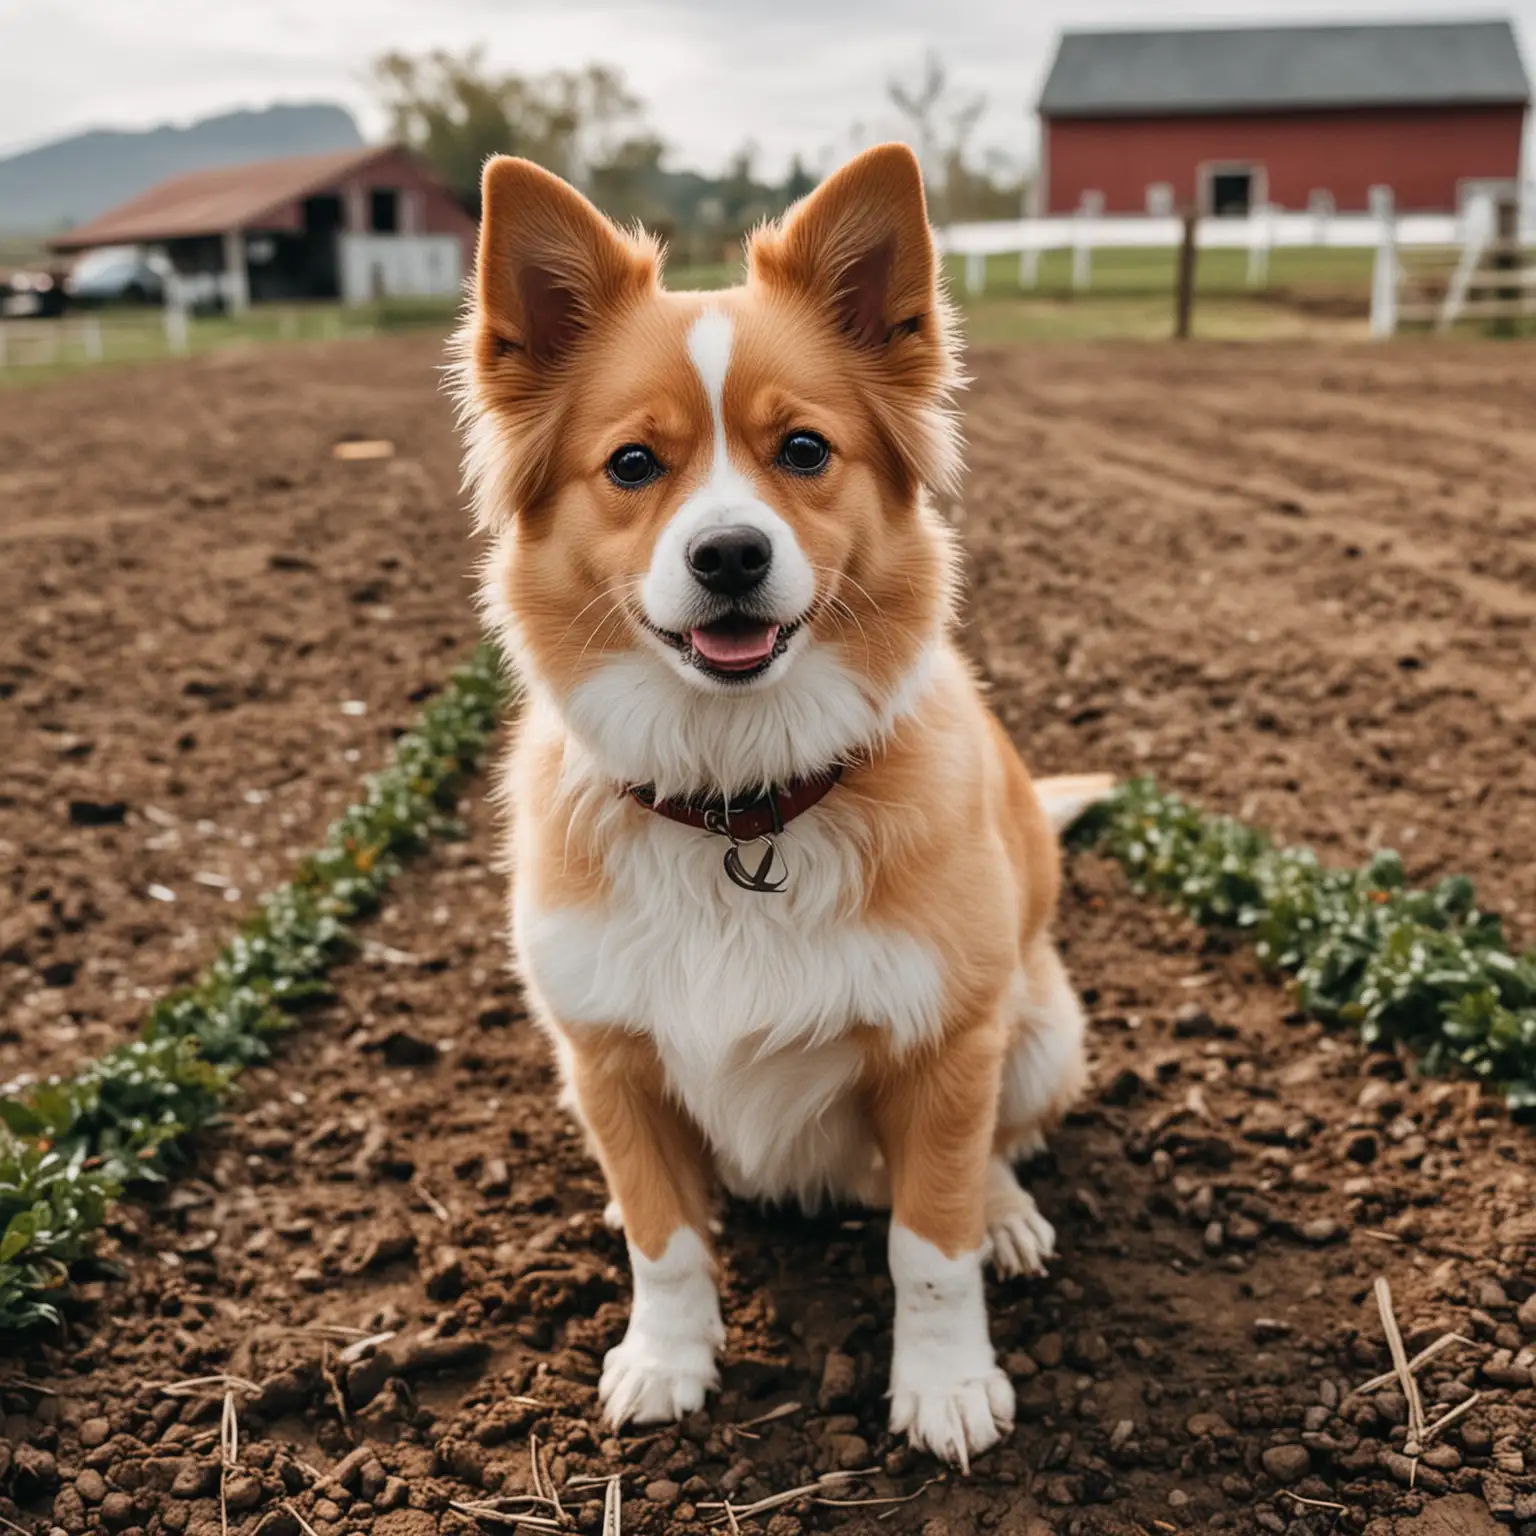 cute dog on a farm
